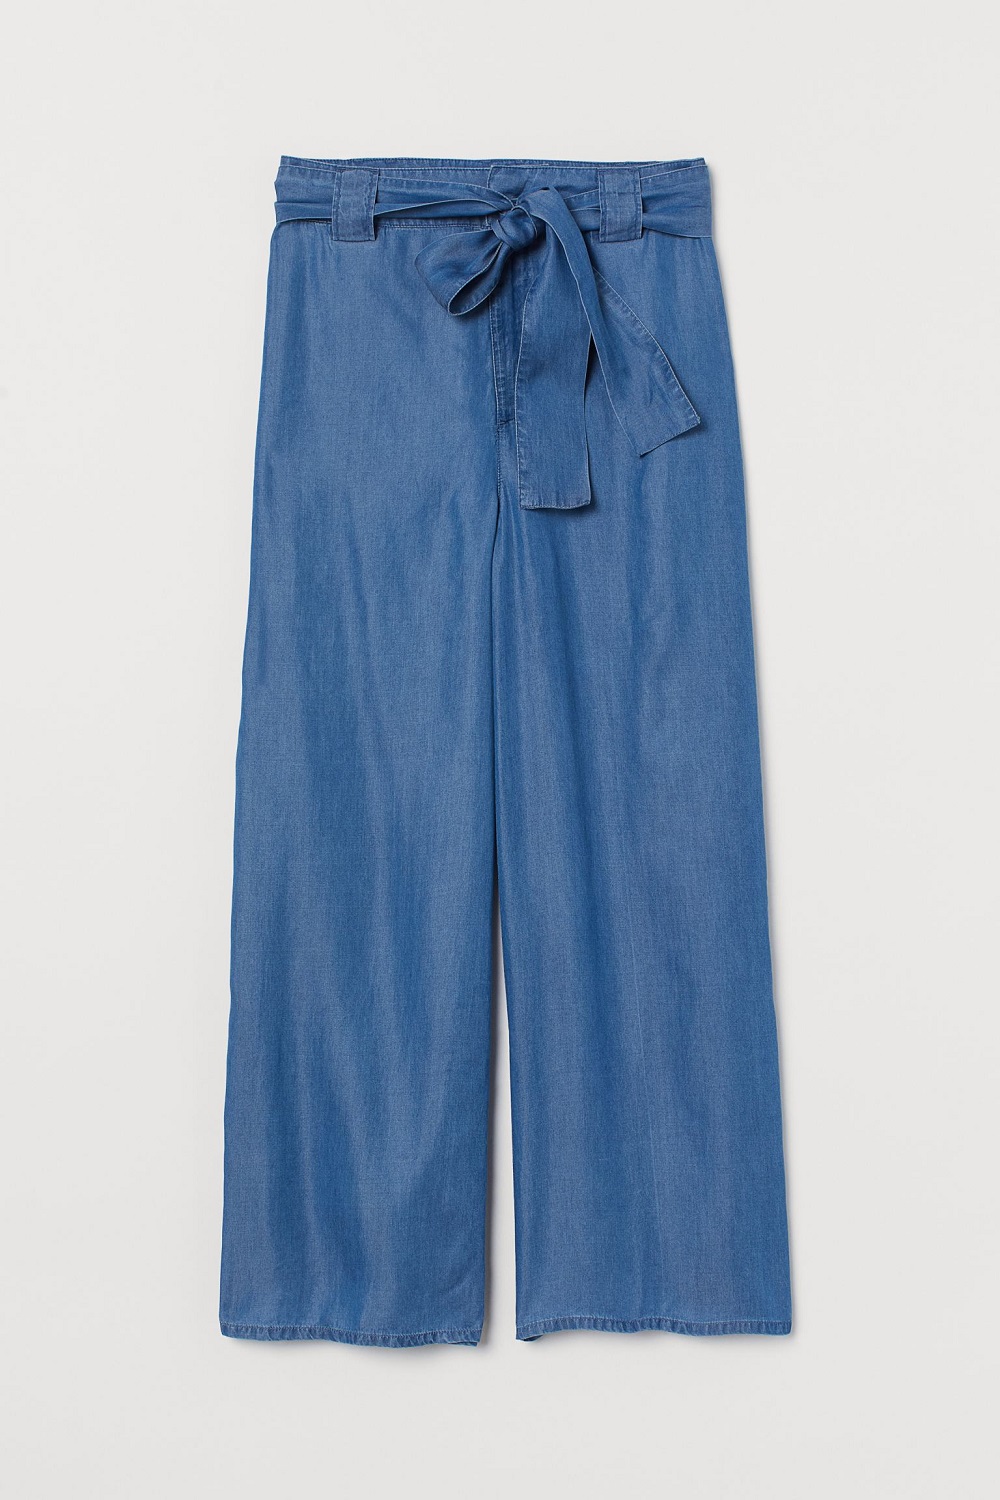 H&M udobne hlače proljeće 2021.